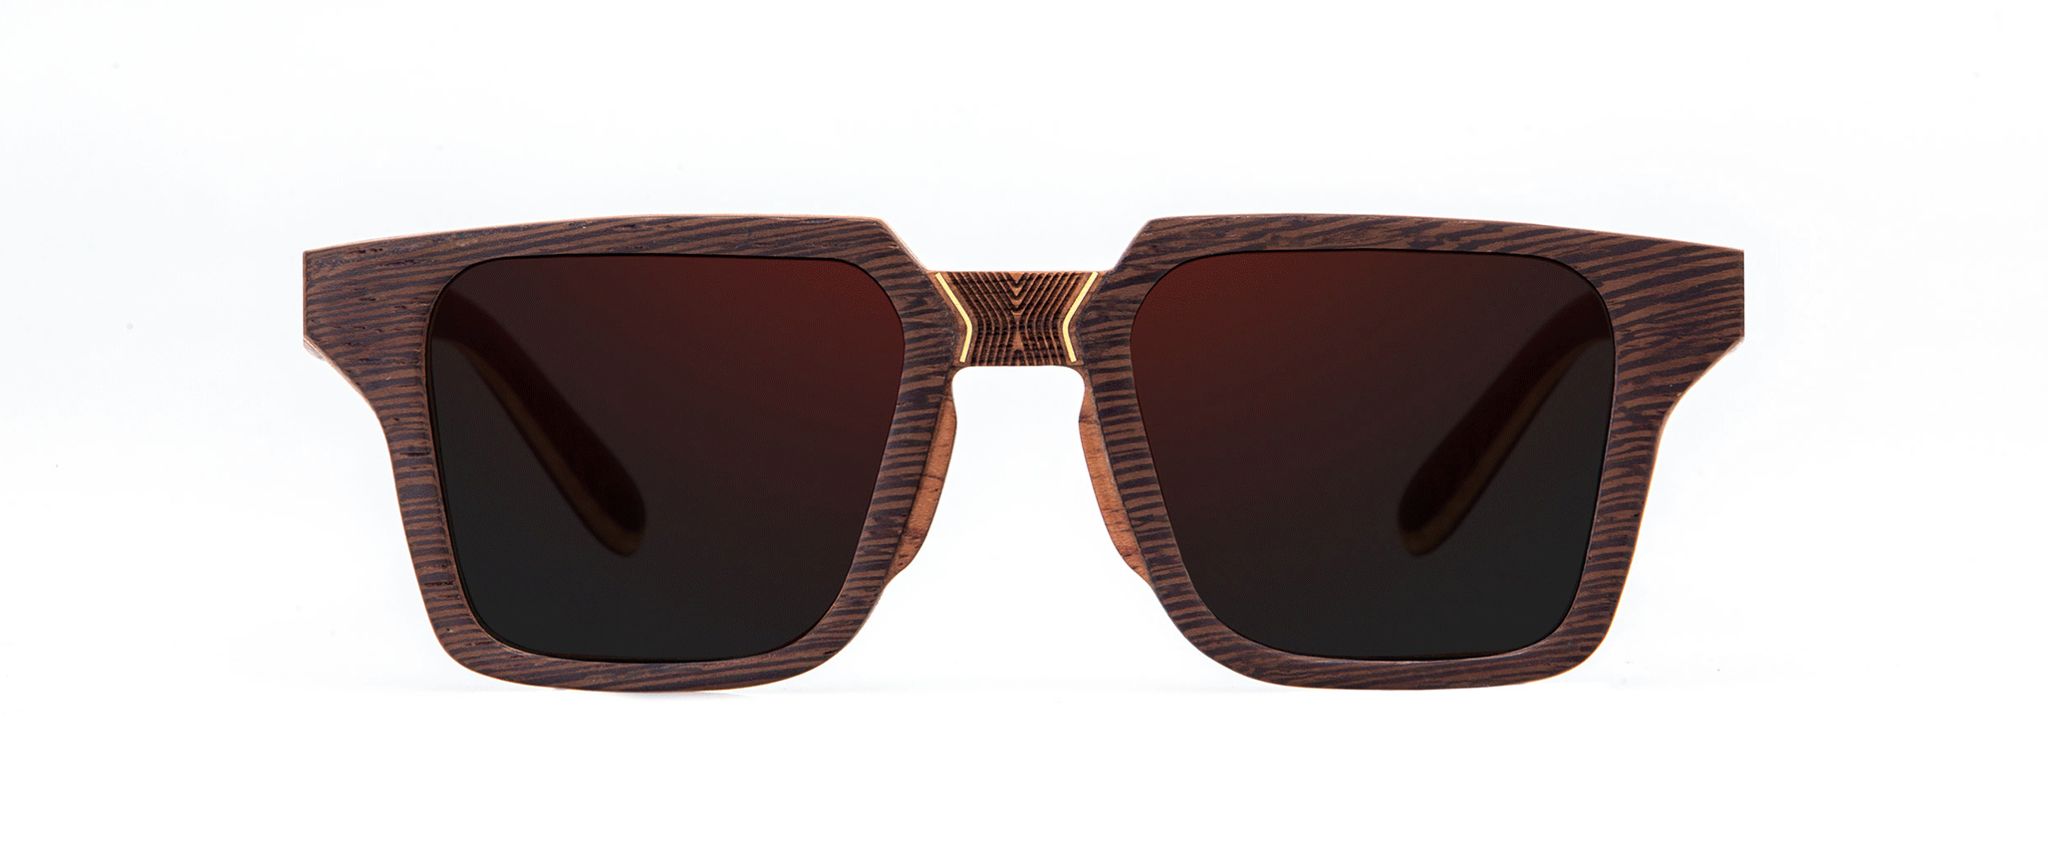 Totem Wenge Vakay designer sunglasses